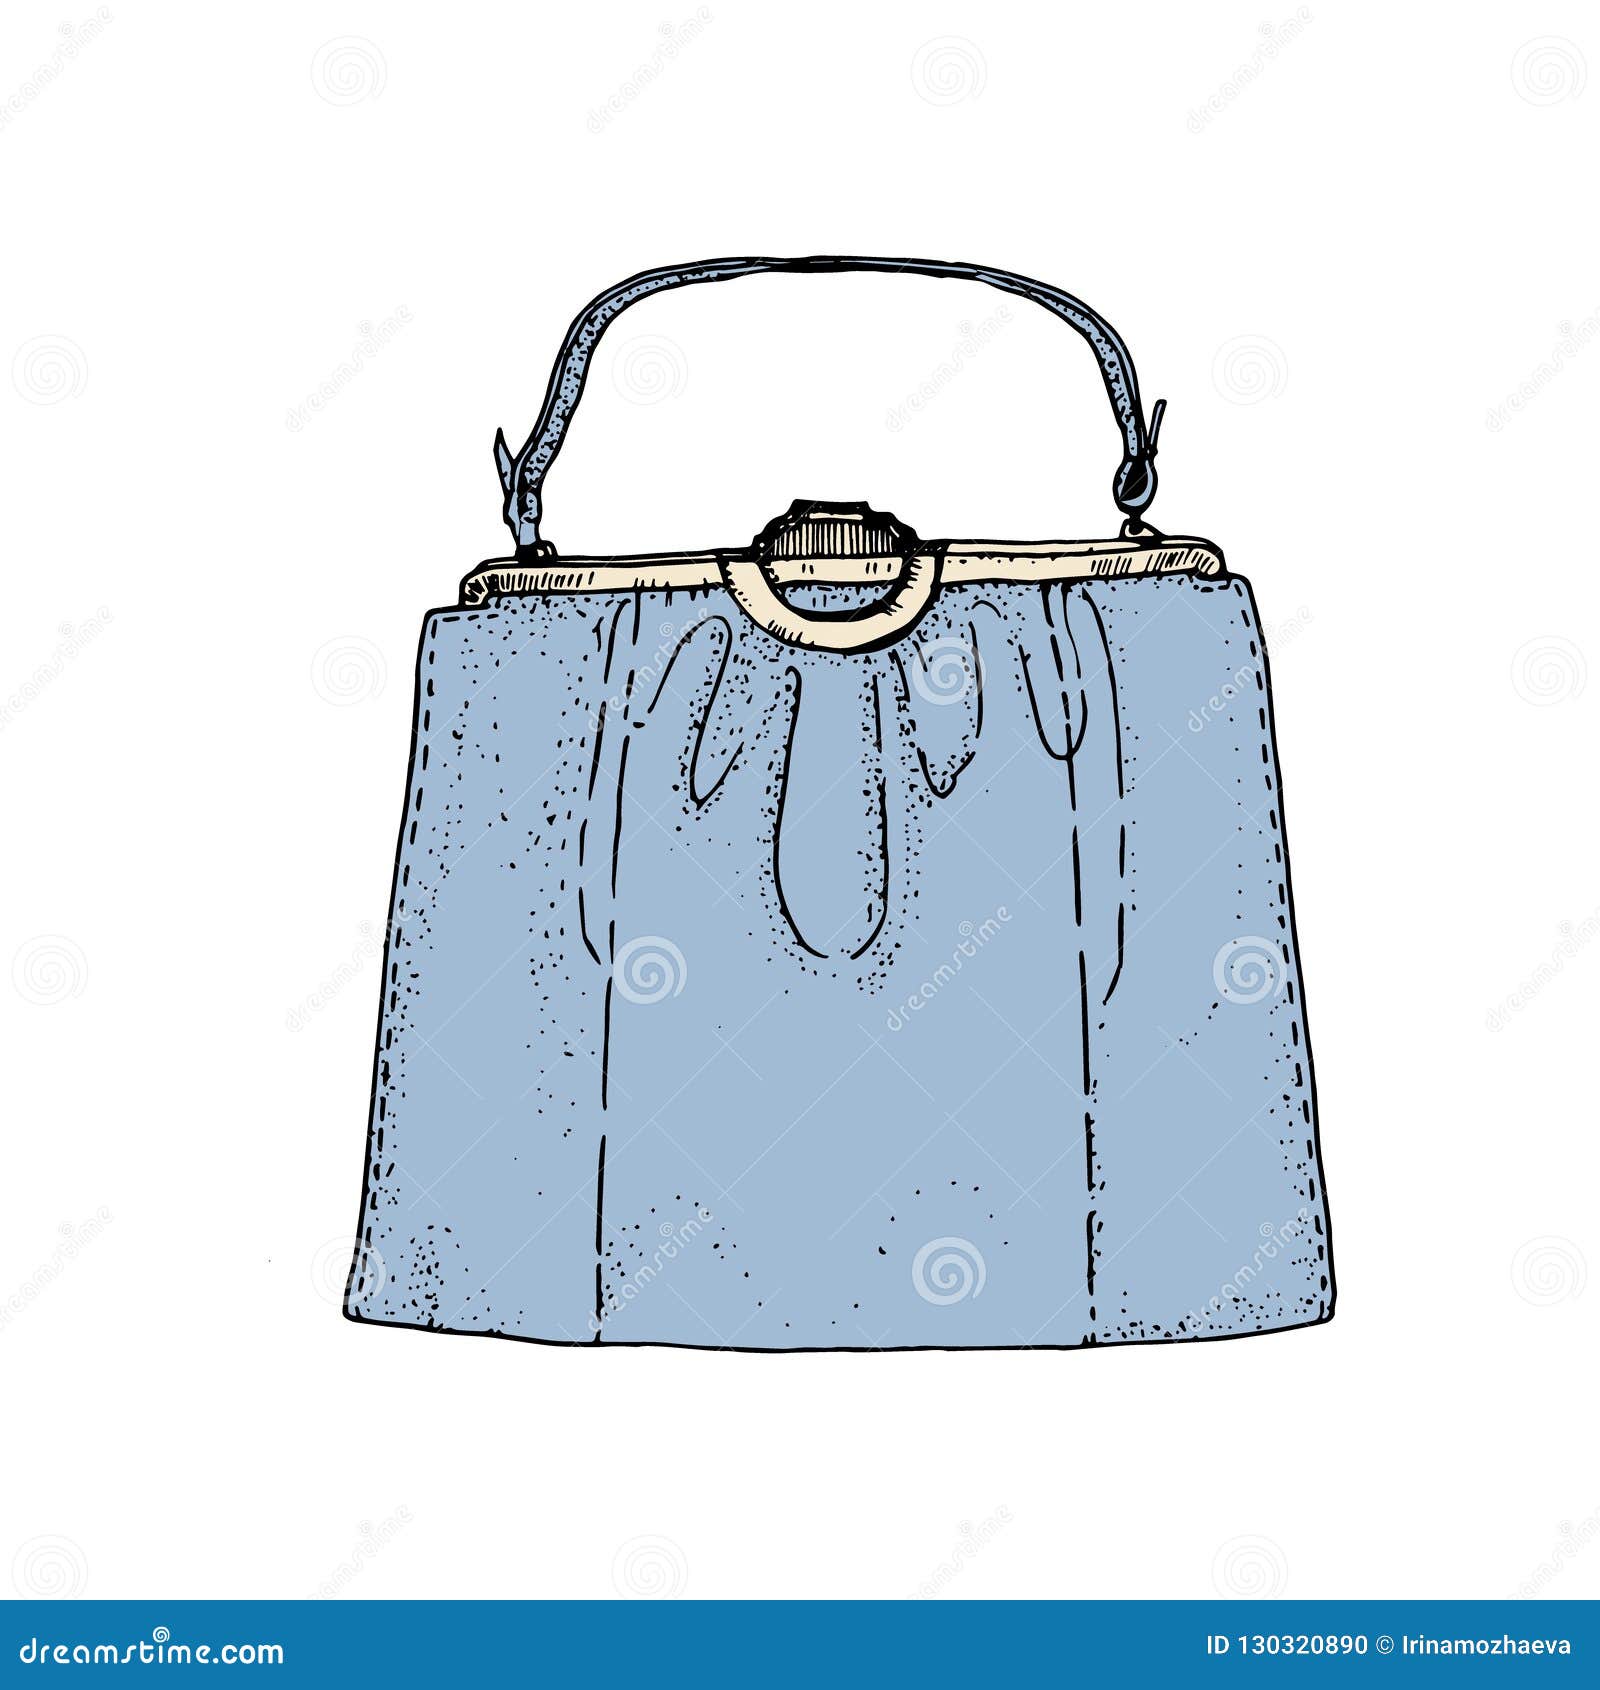 Handbag Drawing Photos and Images | Shutterstock